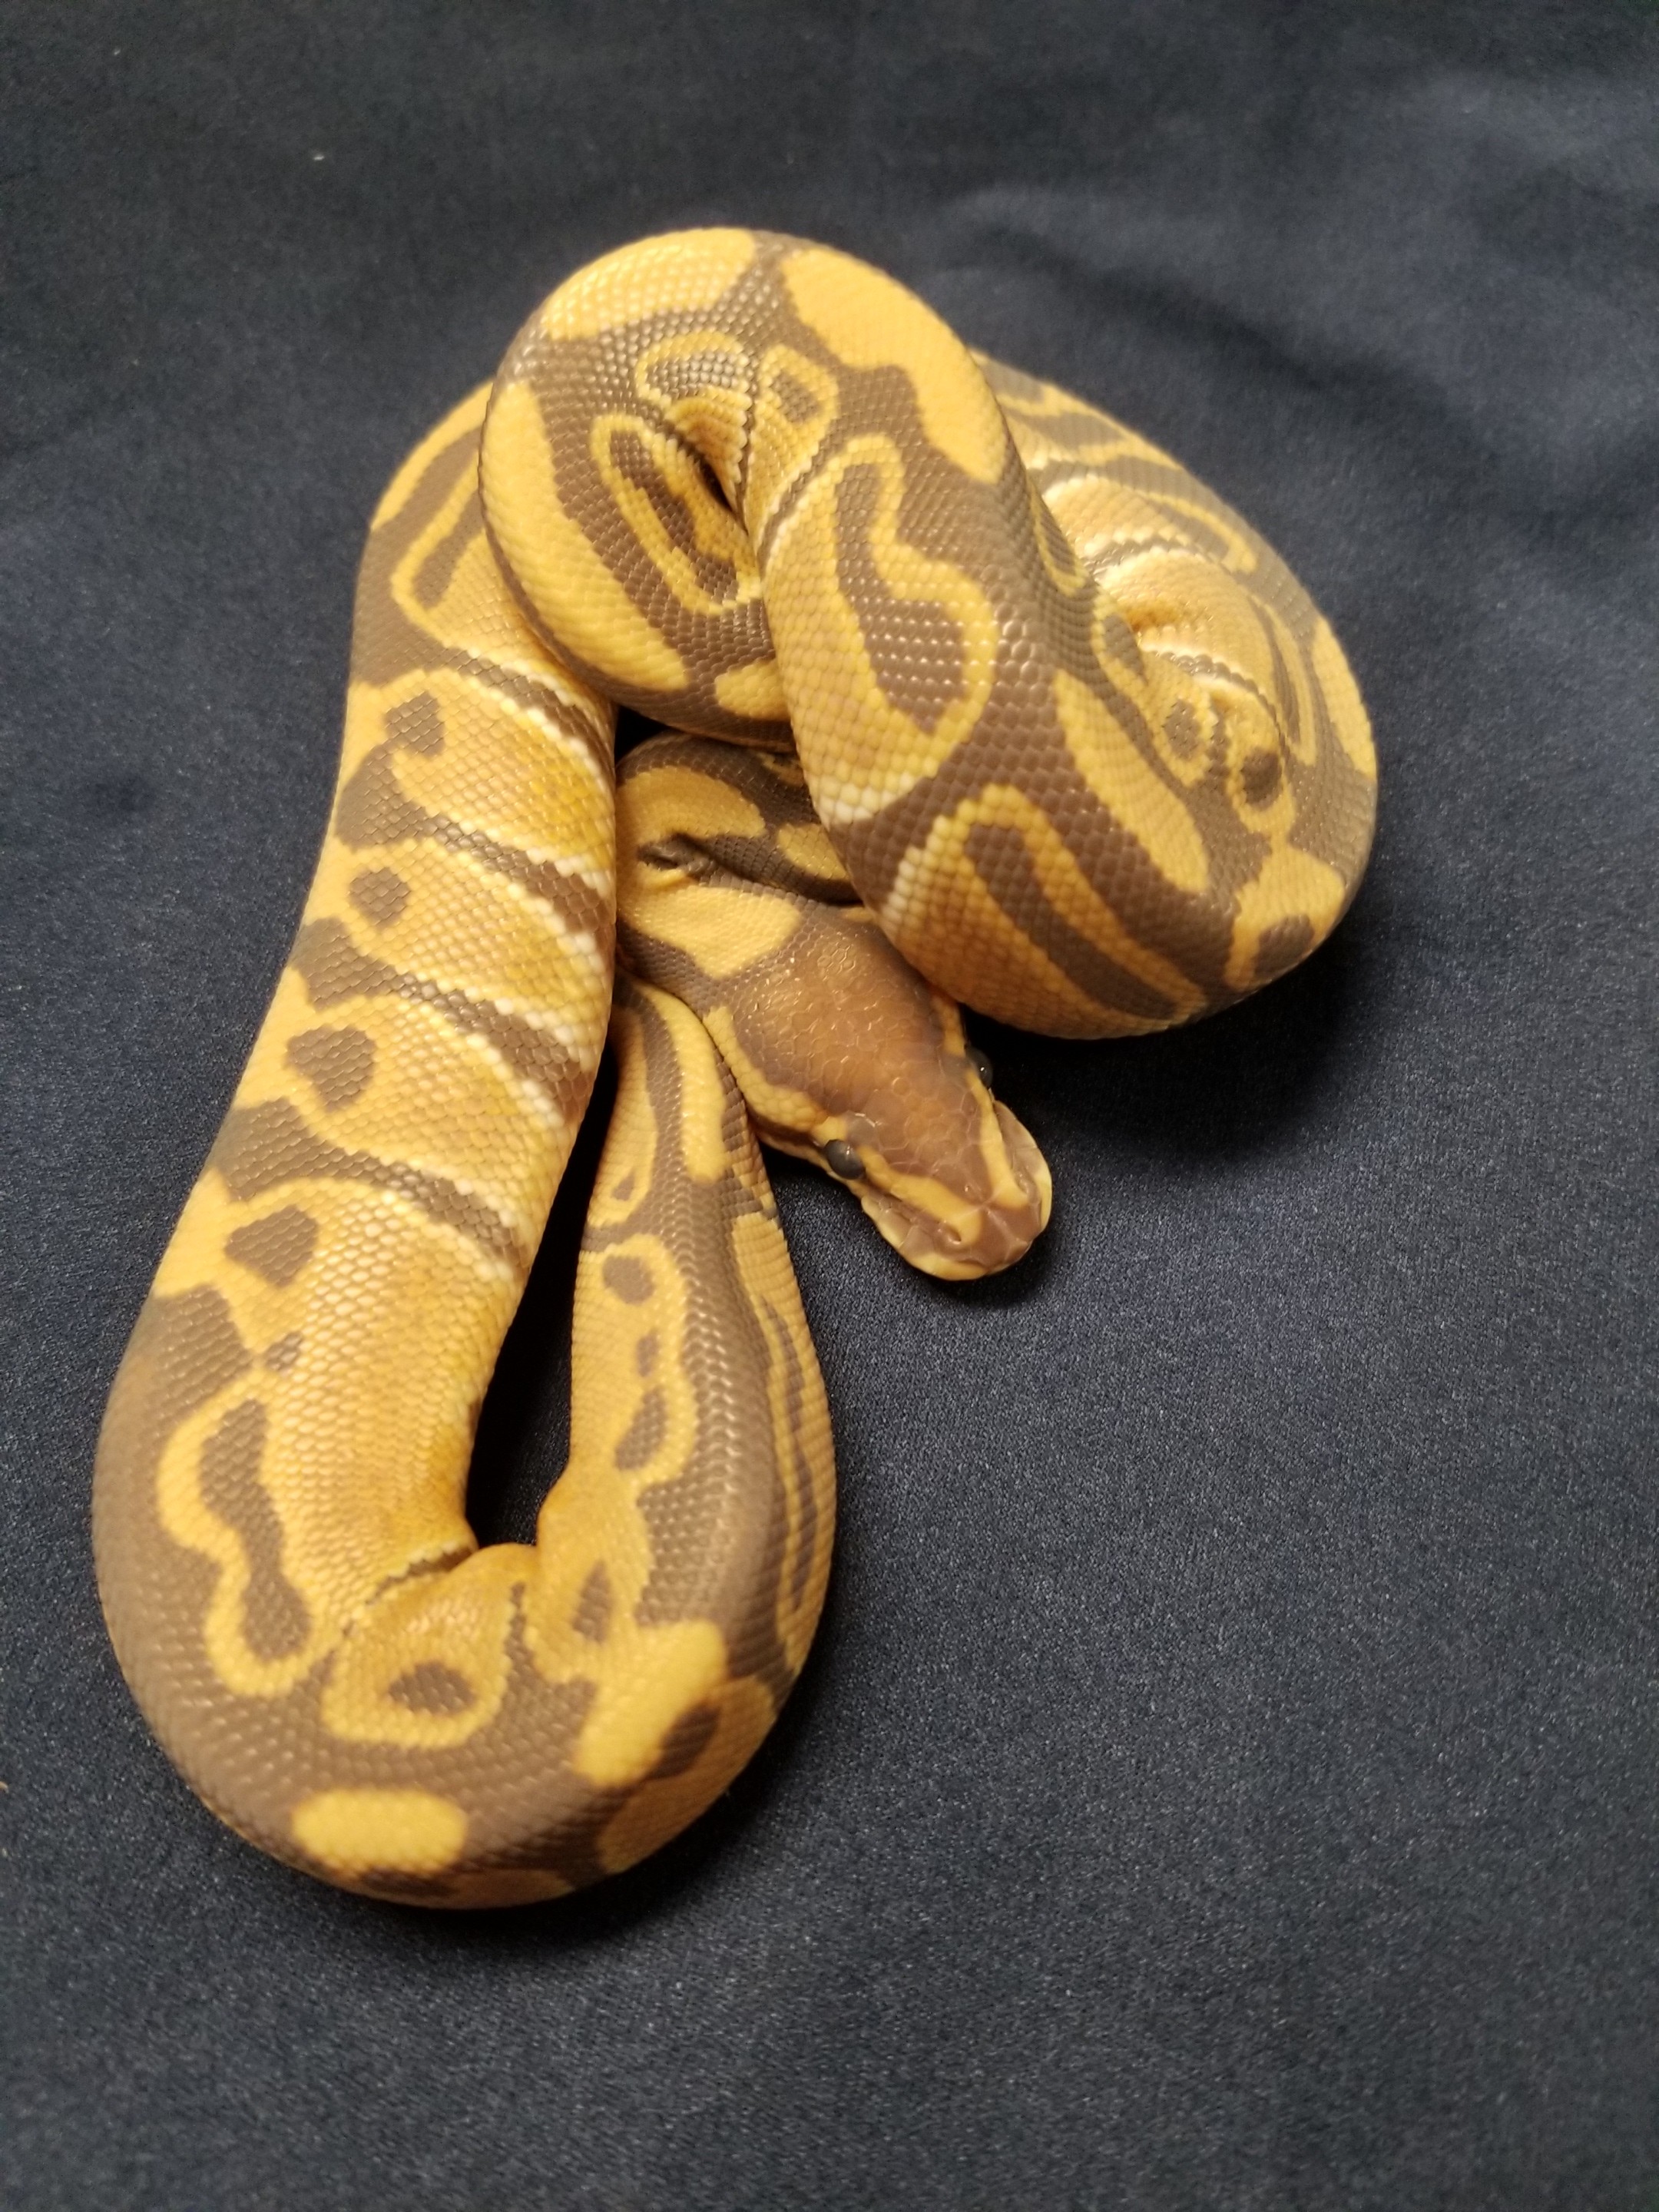 Monarch Ball Python by Tom Harbin Reptiles